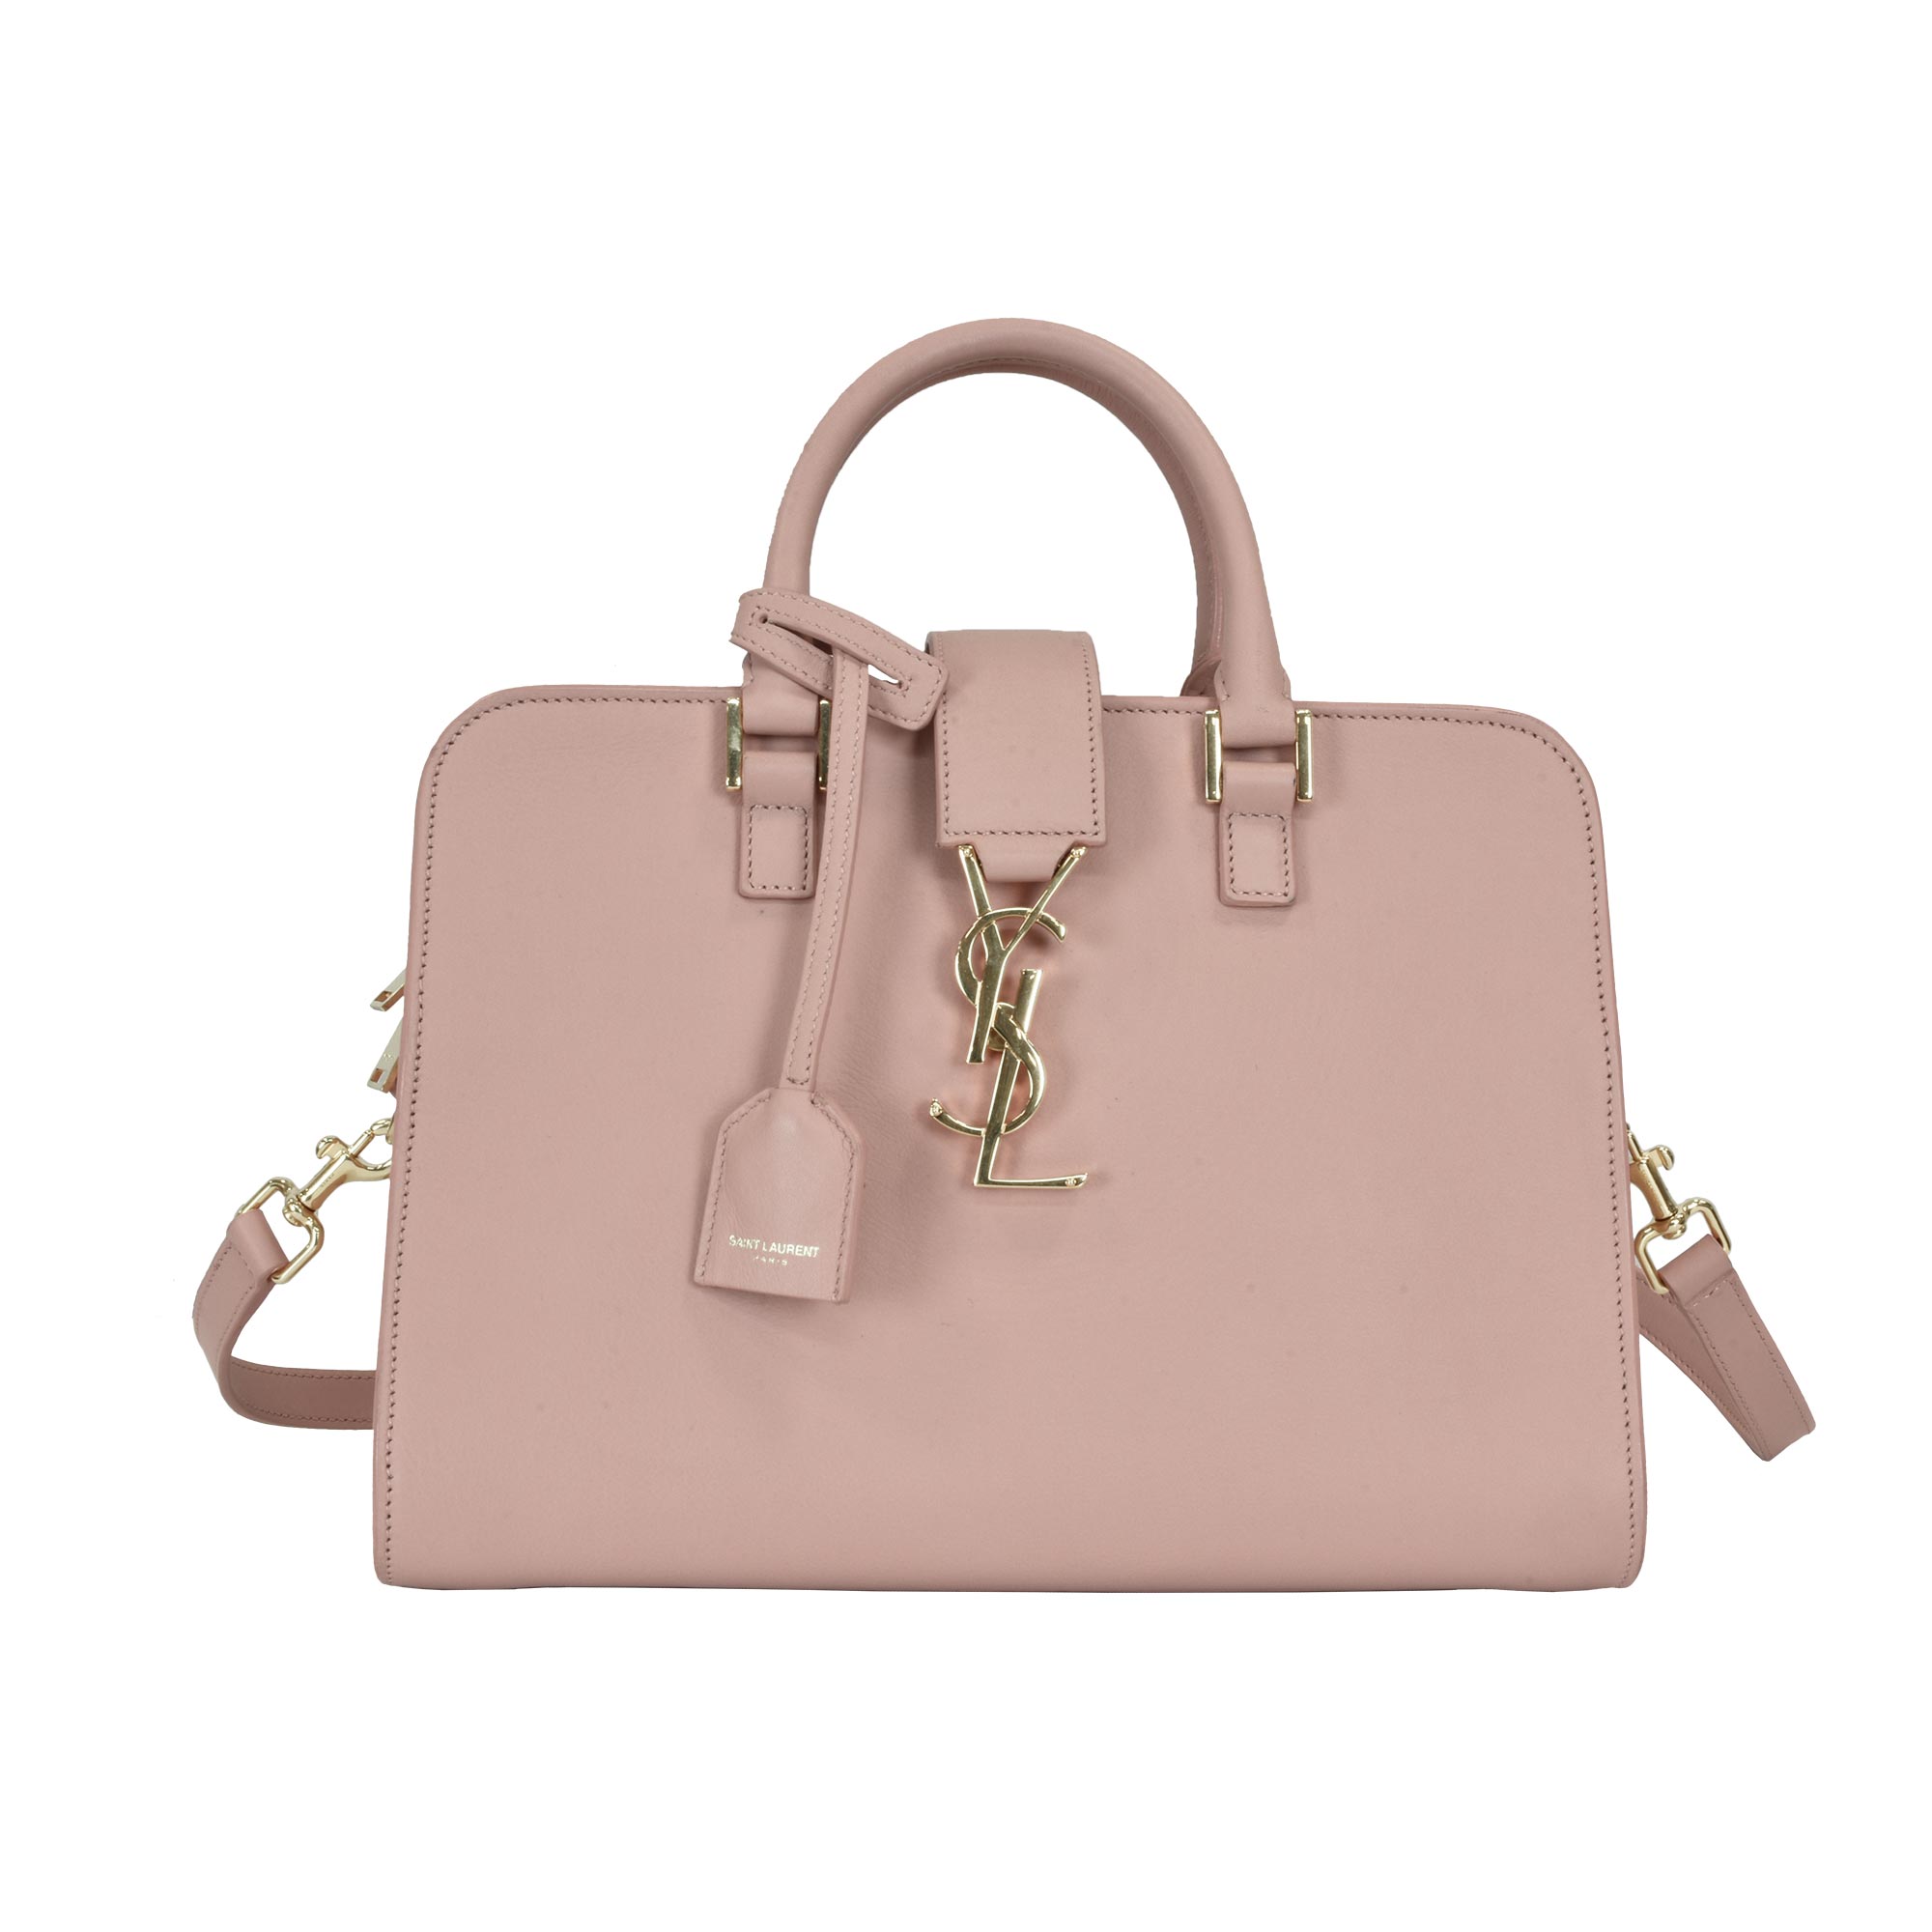 Yves Saint Laurent - Pink calfskin leather small monogram 'Cabas' bag